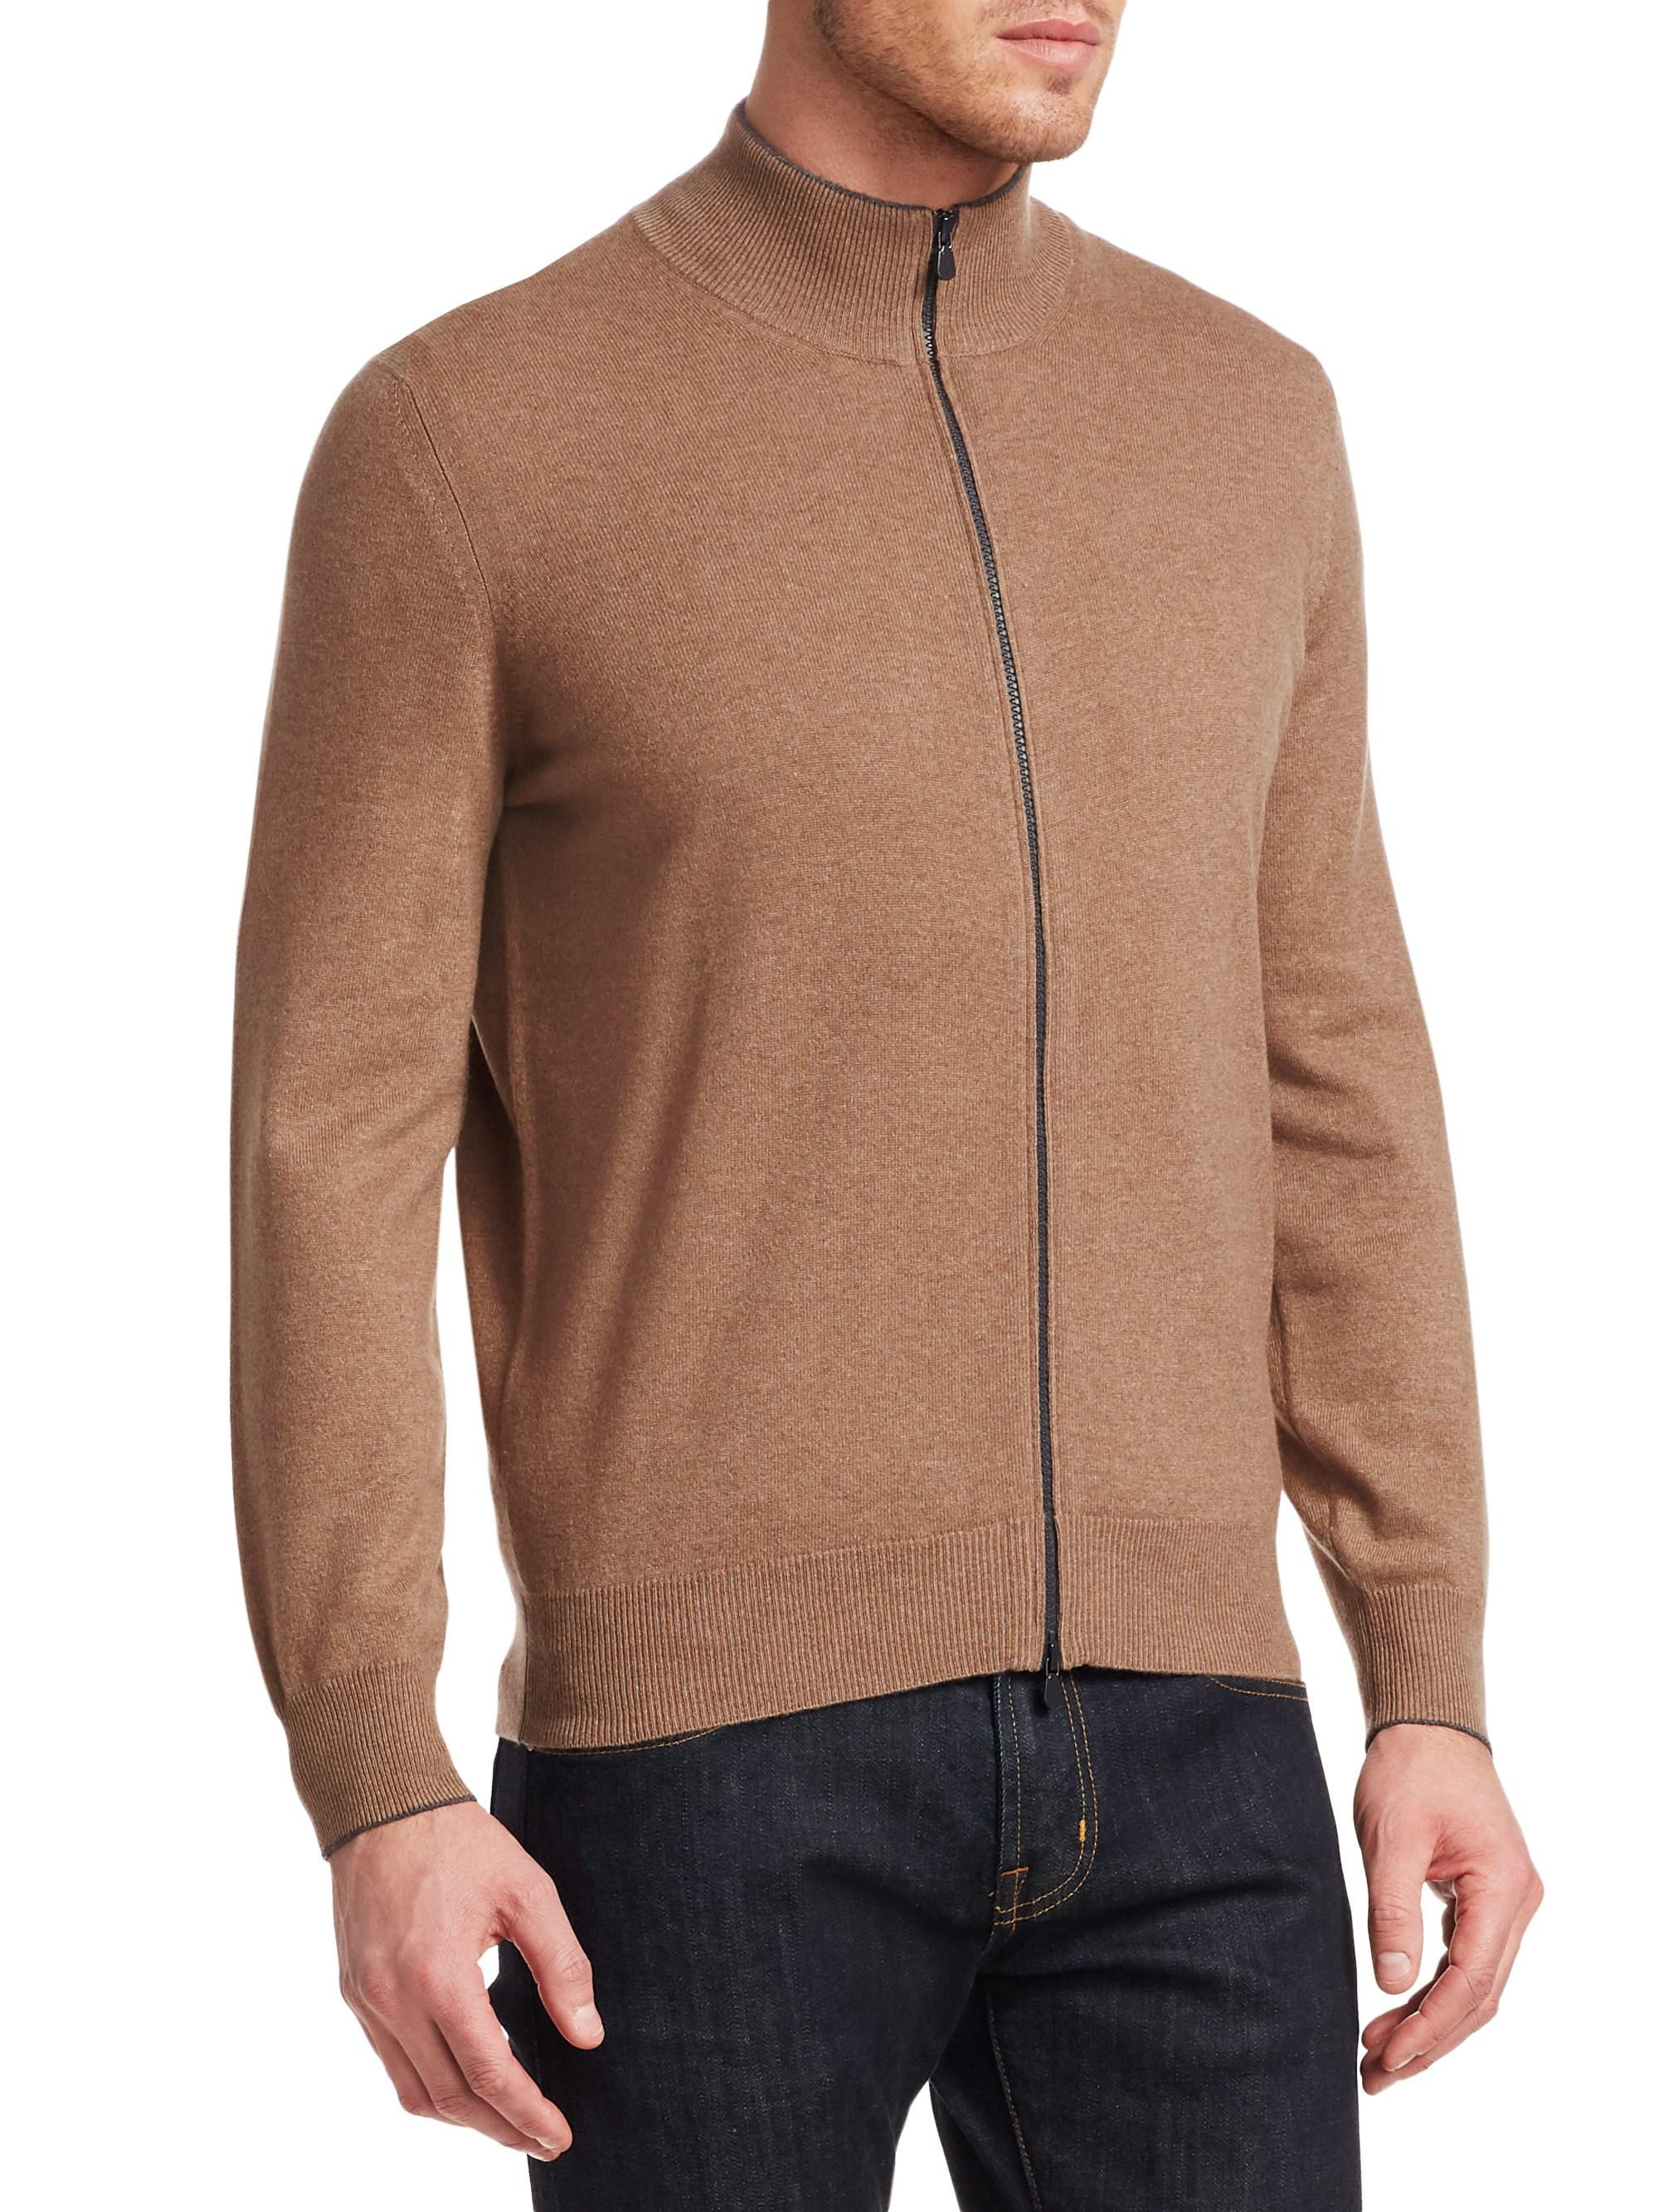 Brunello Cucinelli Cashmere Full Zip Sweater for Men - Lyst